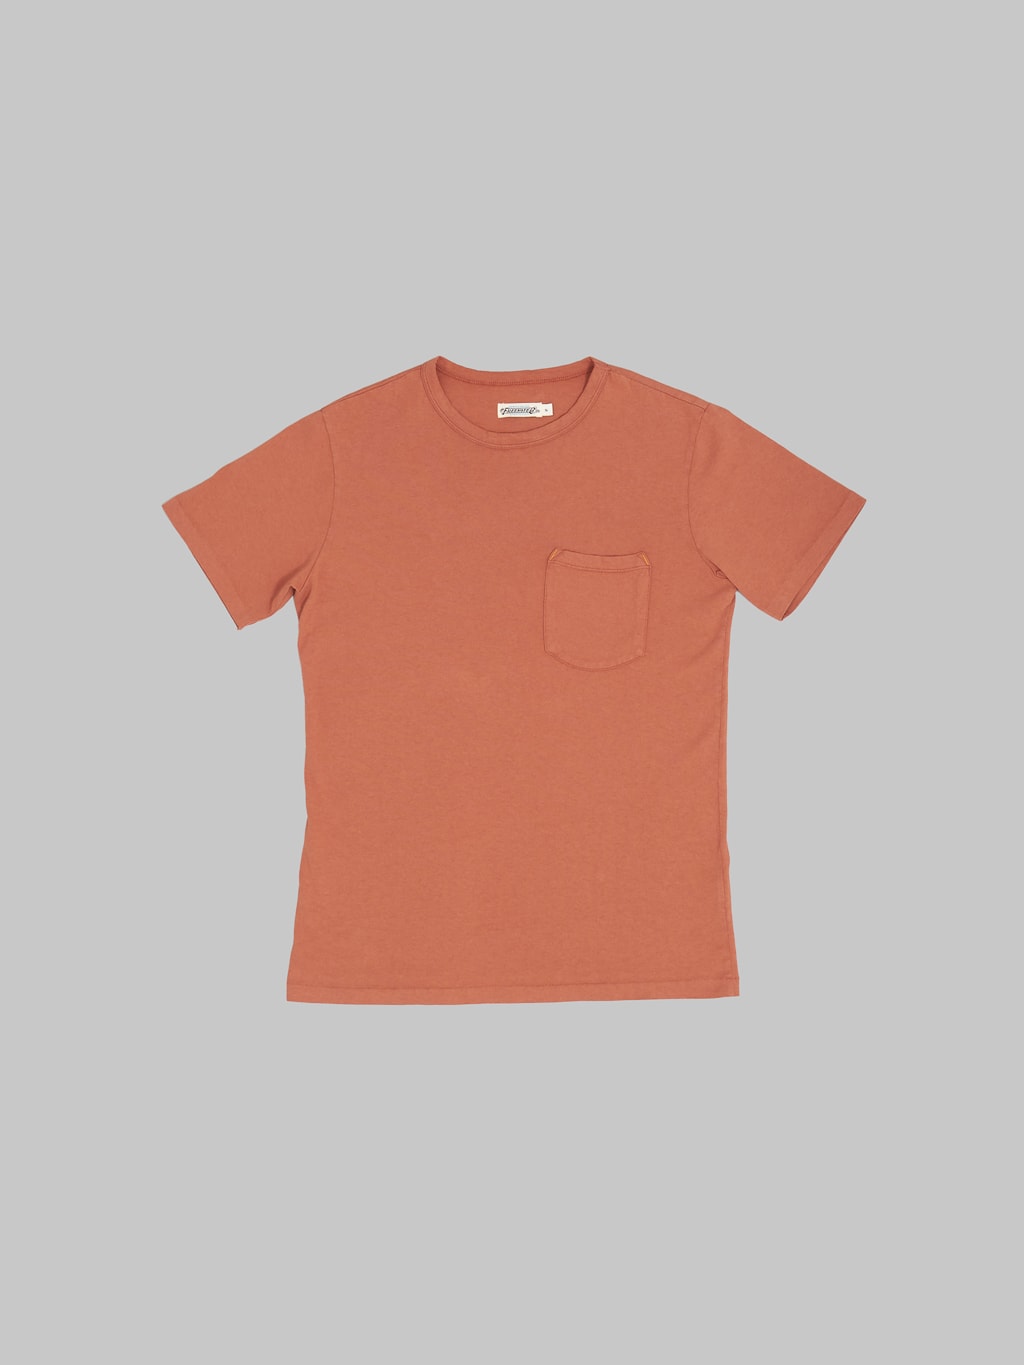 Freenote cloth nine ounce pocket tshirt rust front view